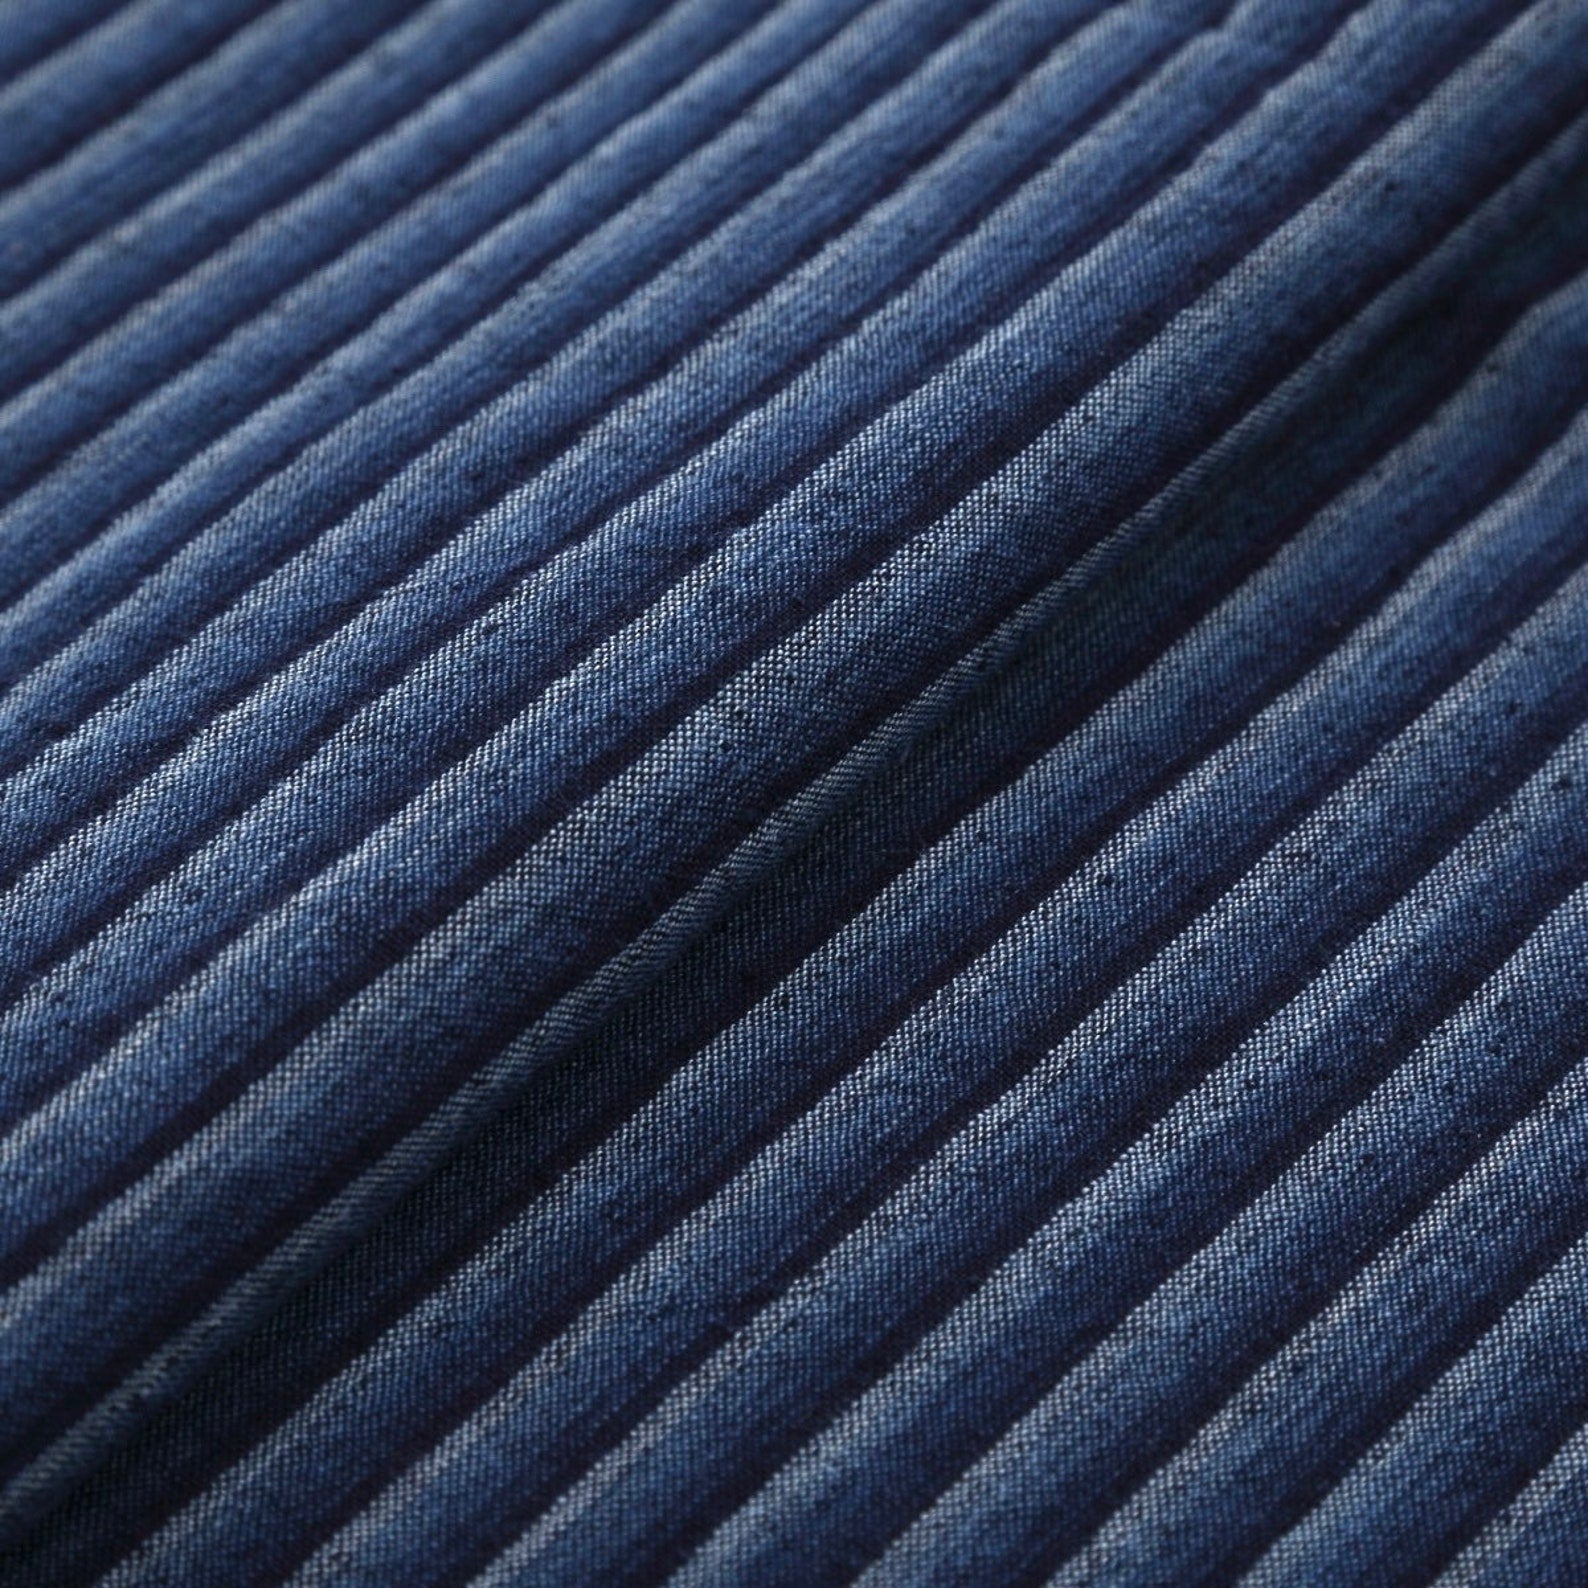 Indigo Navy Blue Corduroy Upholstery Fabric, Fabric Bistro, Columbia